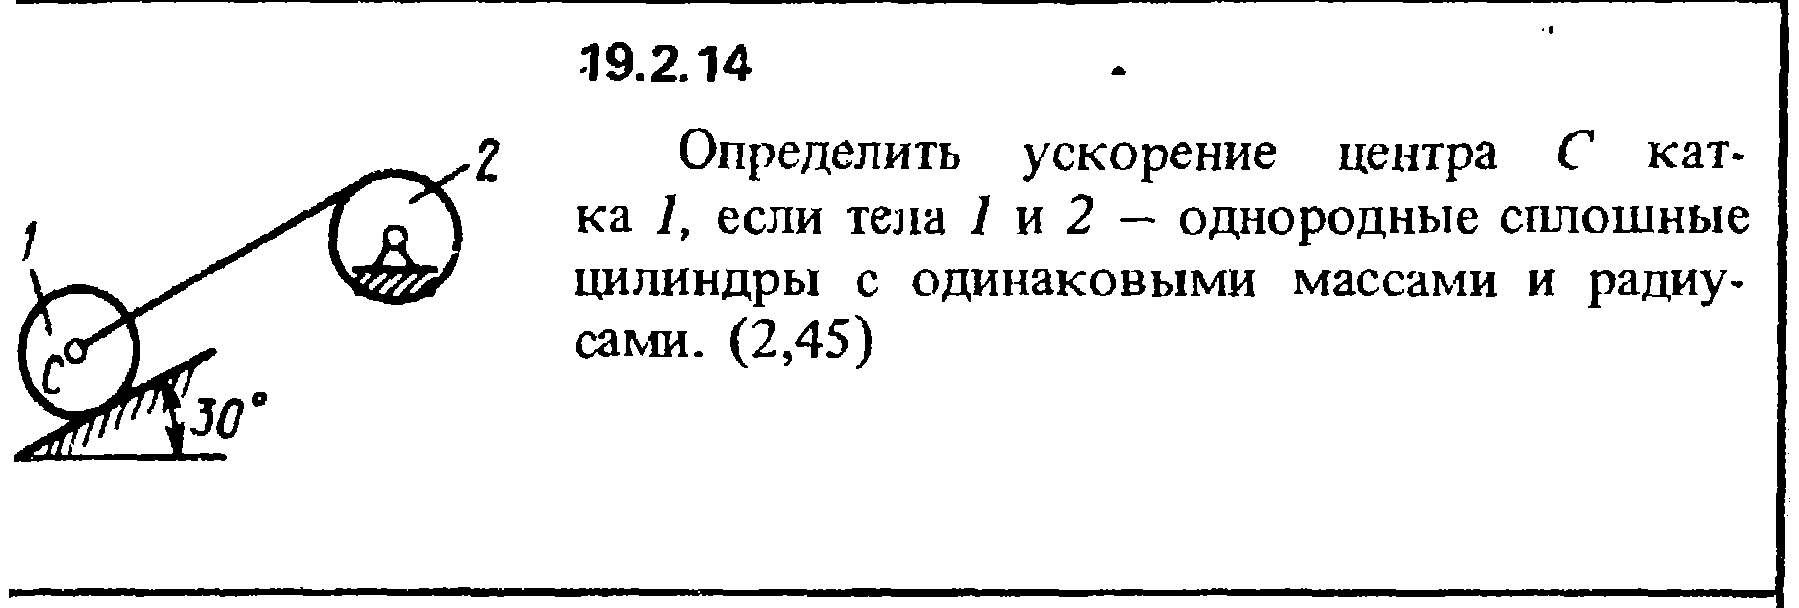 Решение 19.2.14 из сборника (решебника) Кепе О.Е. 1989